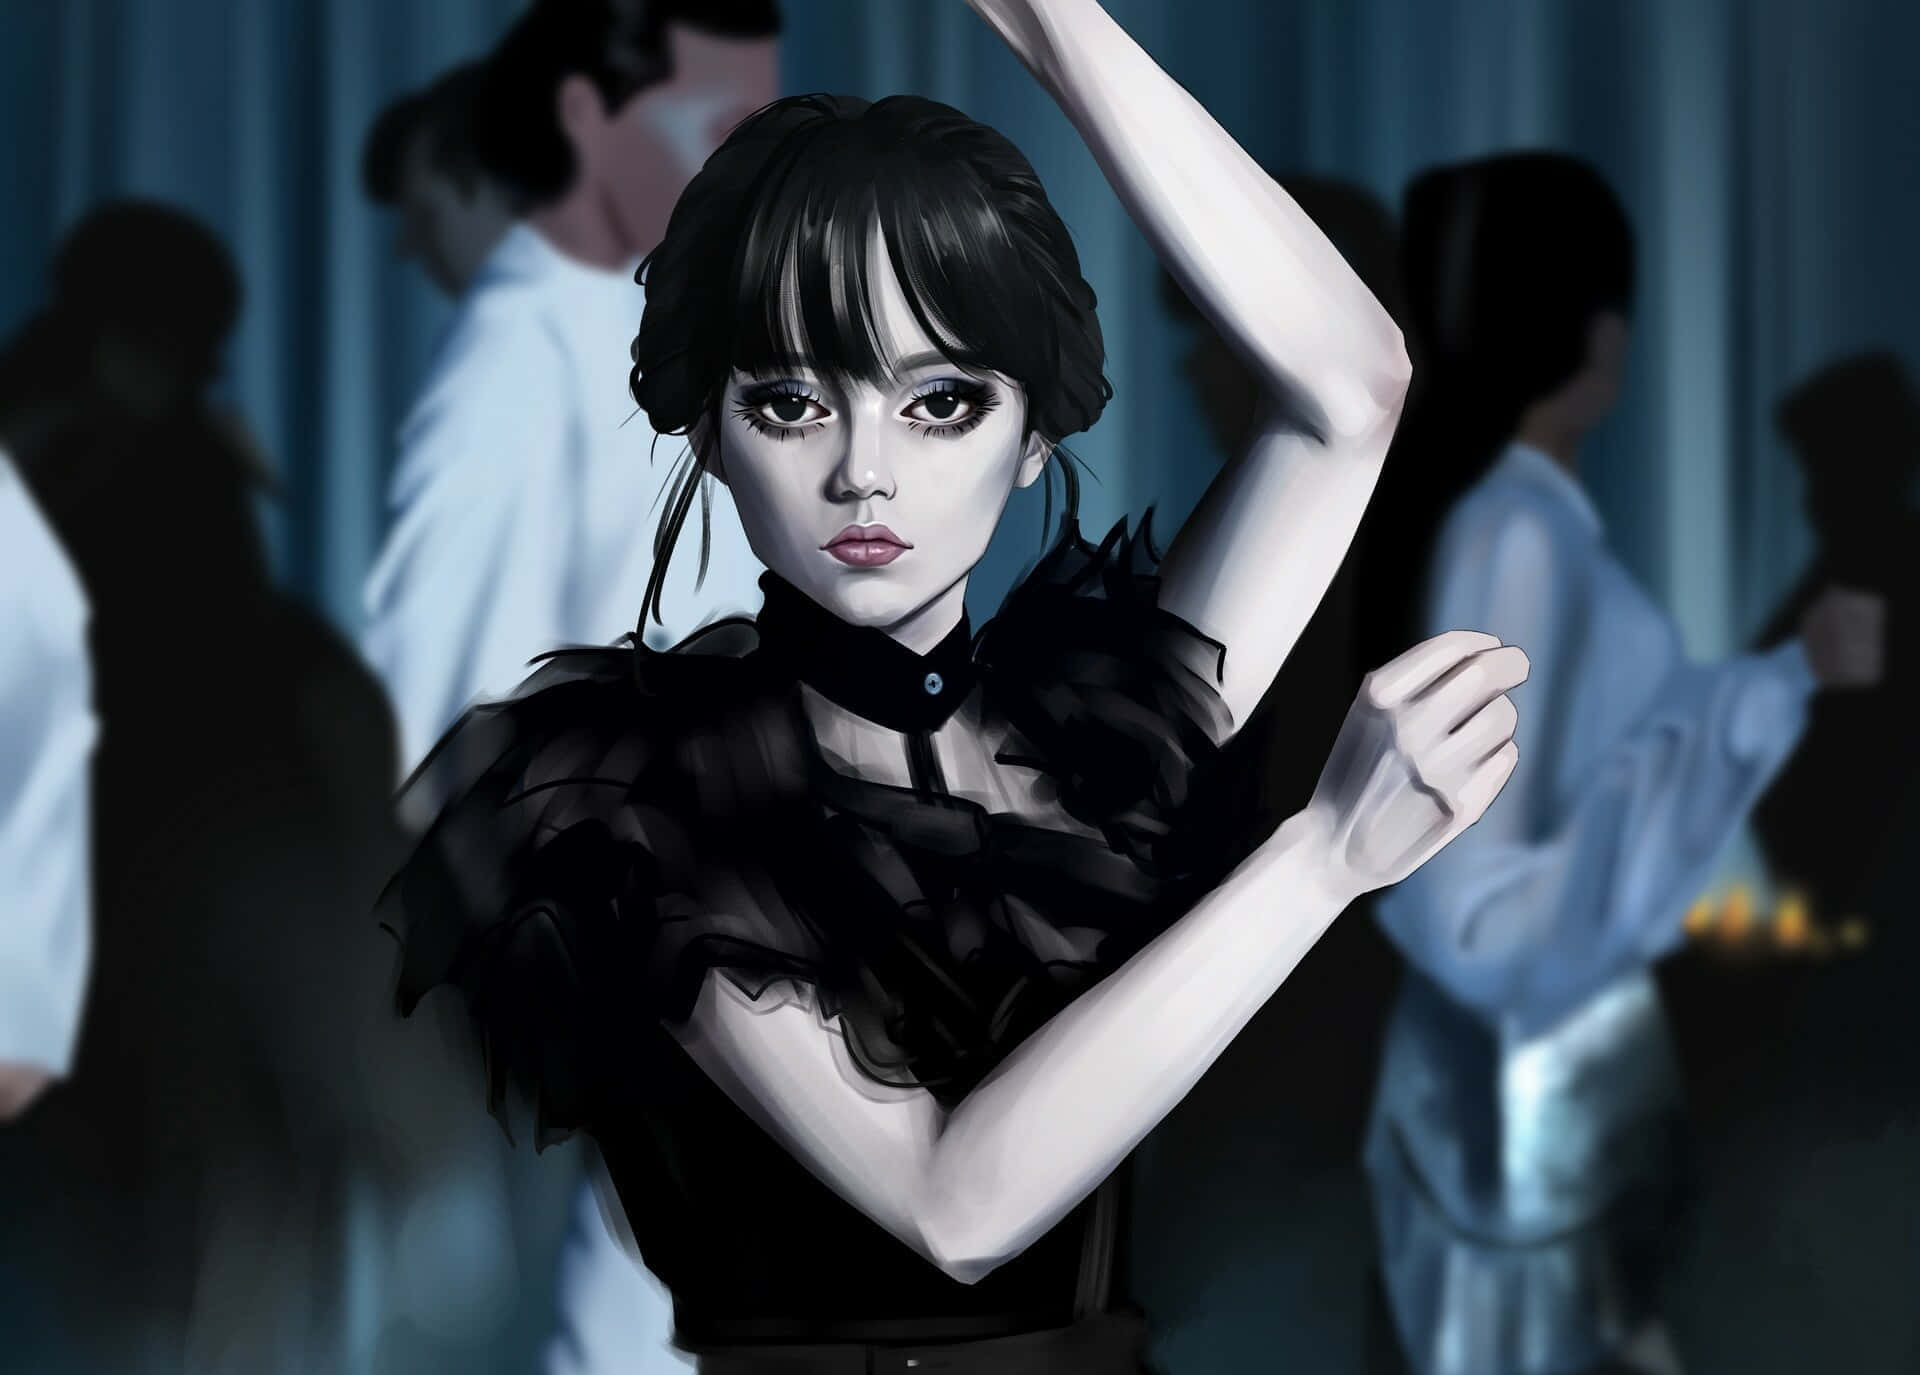 Wednesday Addams Dance Scene Illustration Wallpaper